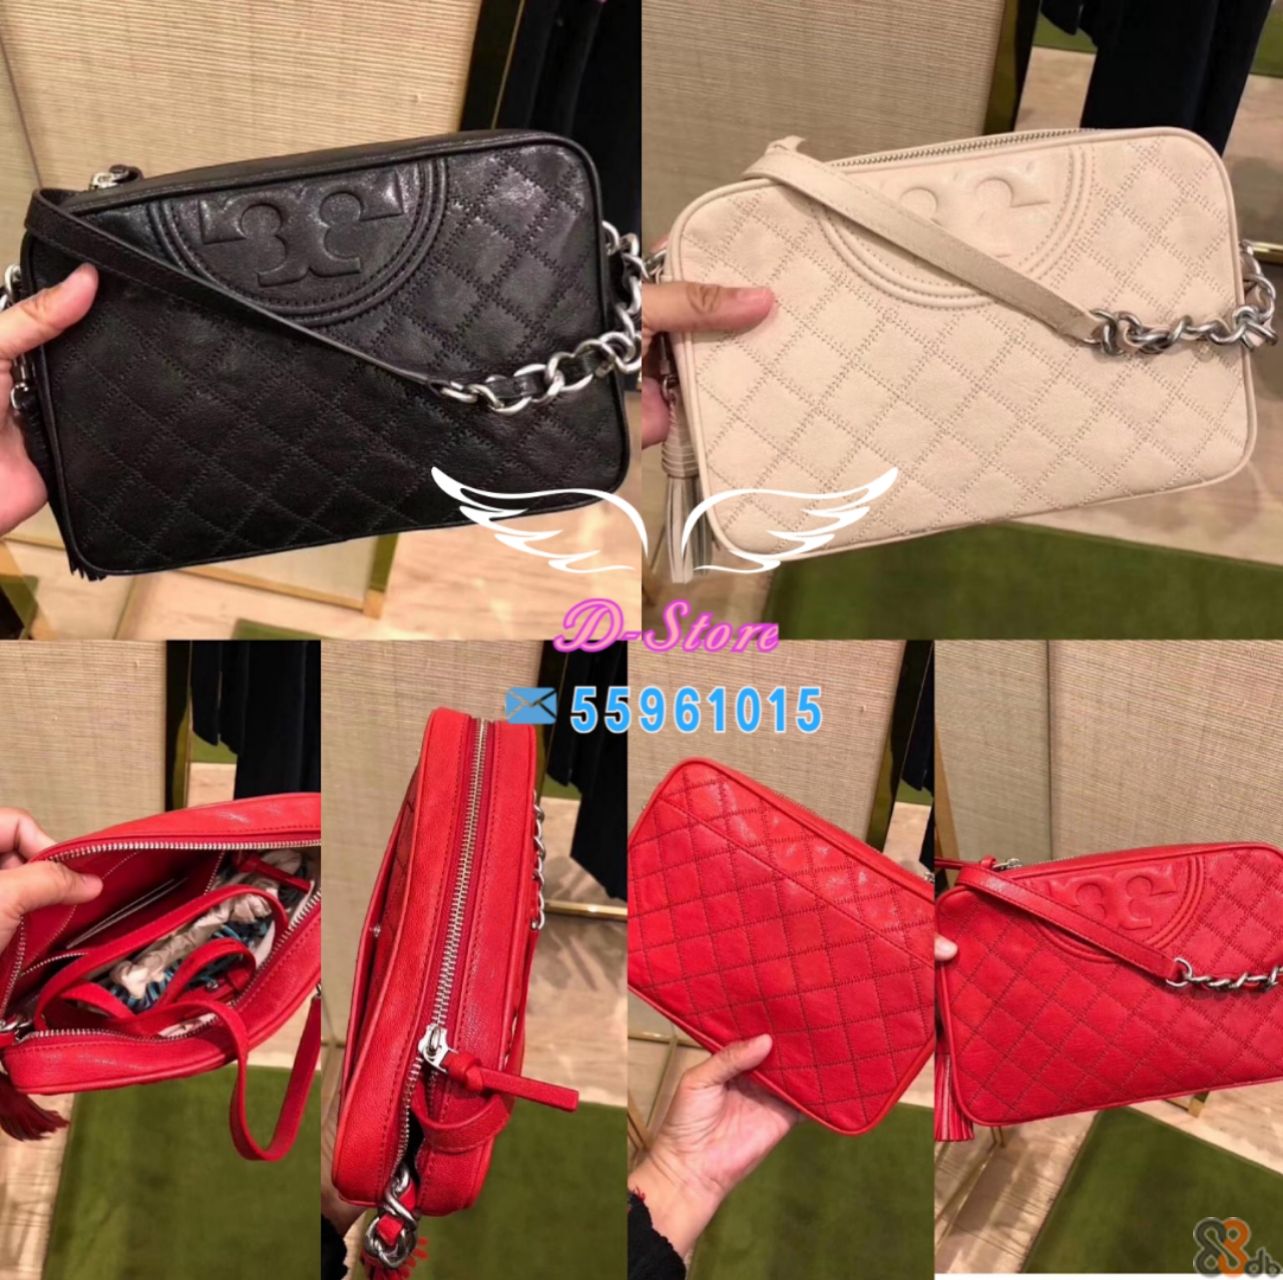 D Store 55961015 li  Bag,Handbag,Shoulder,Pink,Fashion accessory